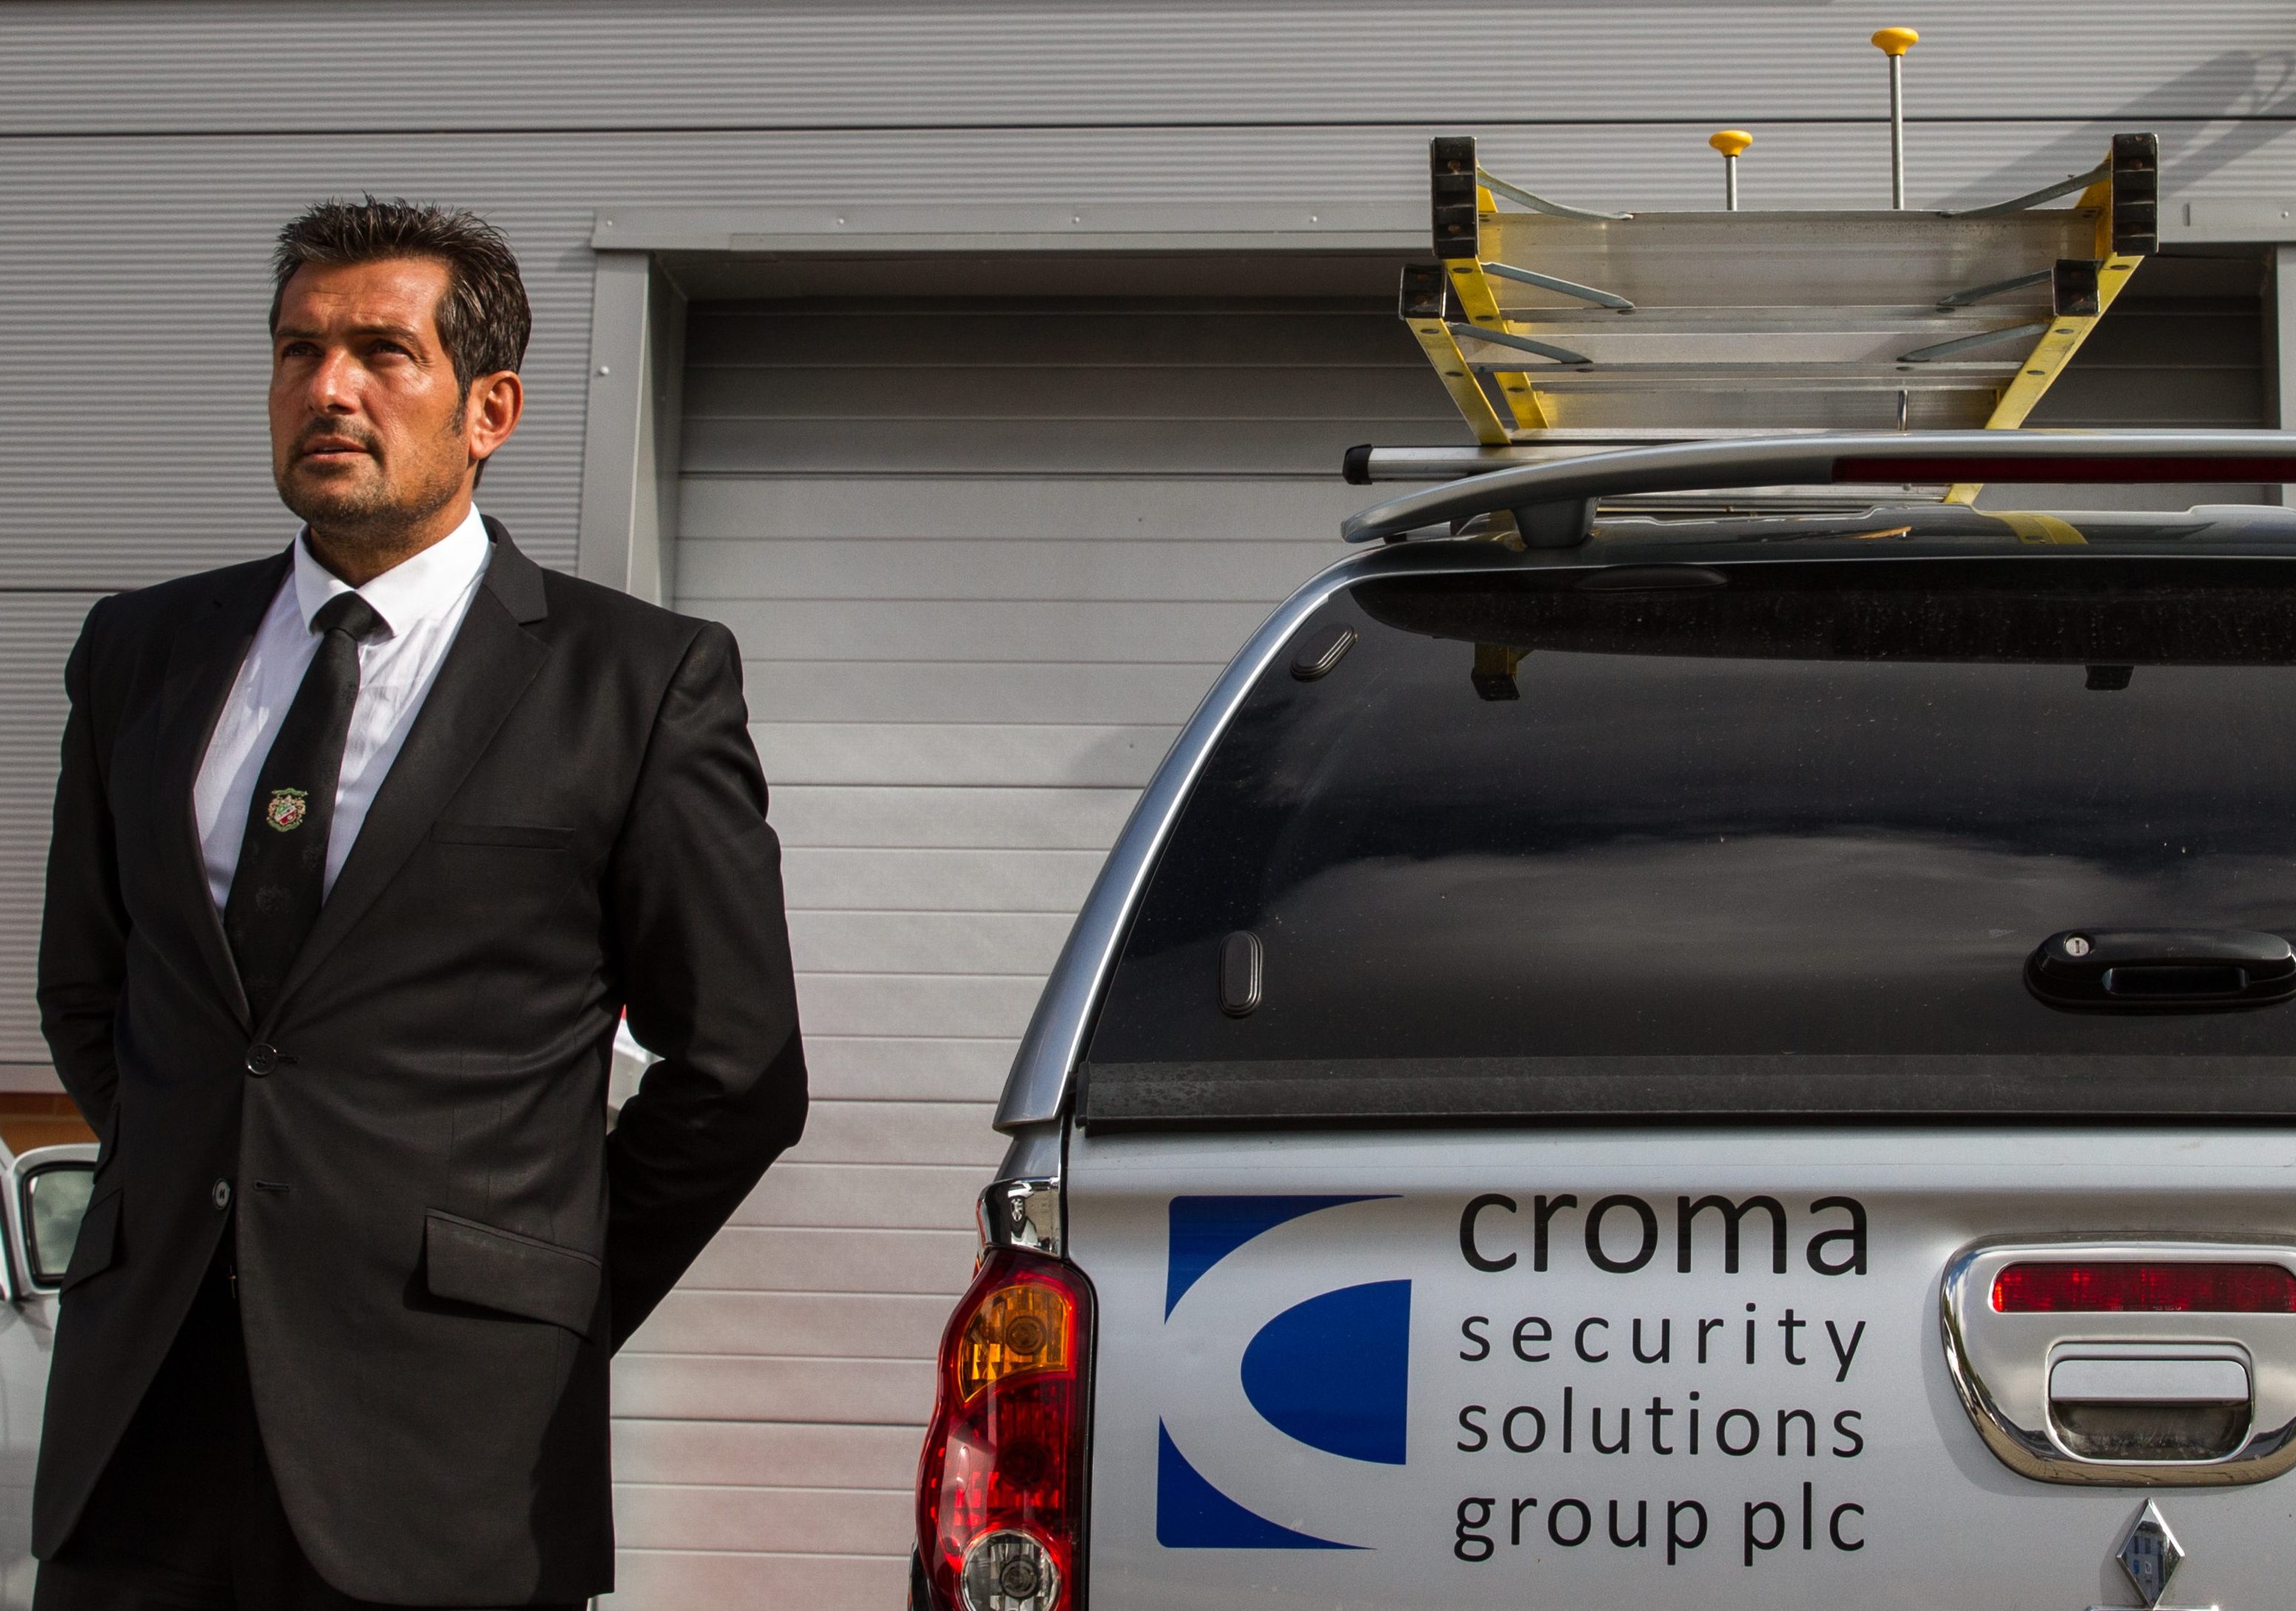 Roberto Fiorentino, CEO of Croma Security Solutions